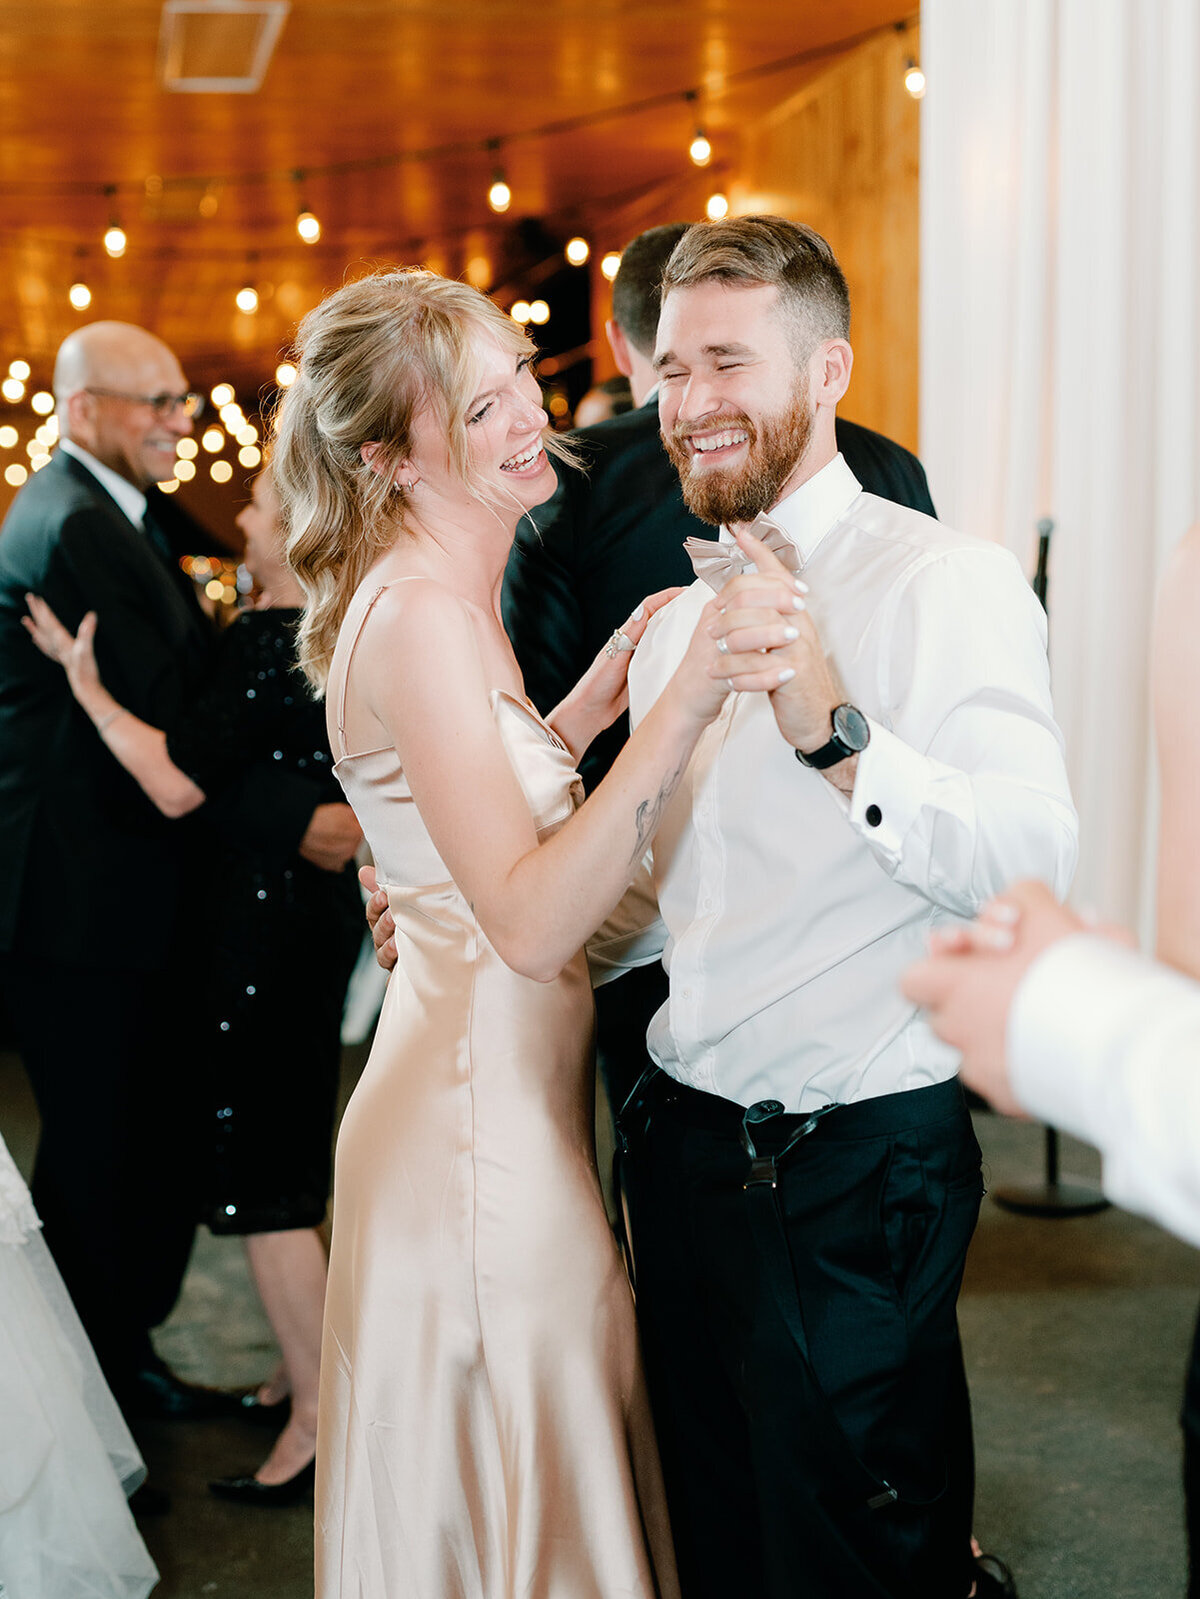 Guest smile and dance at wedding reception at salamander resort